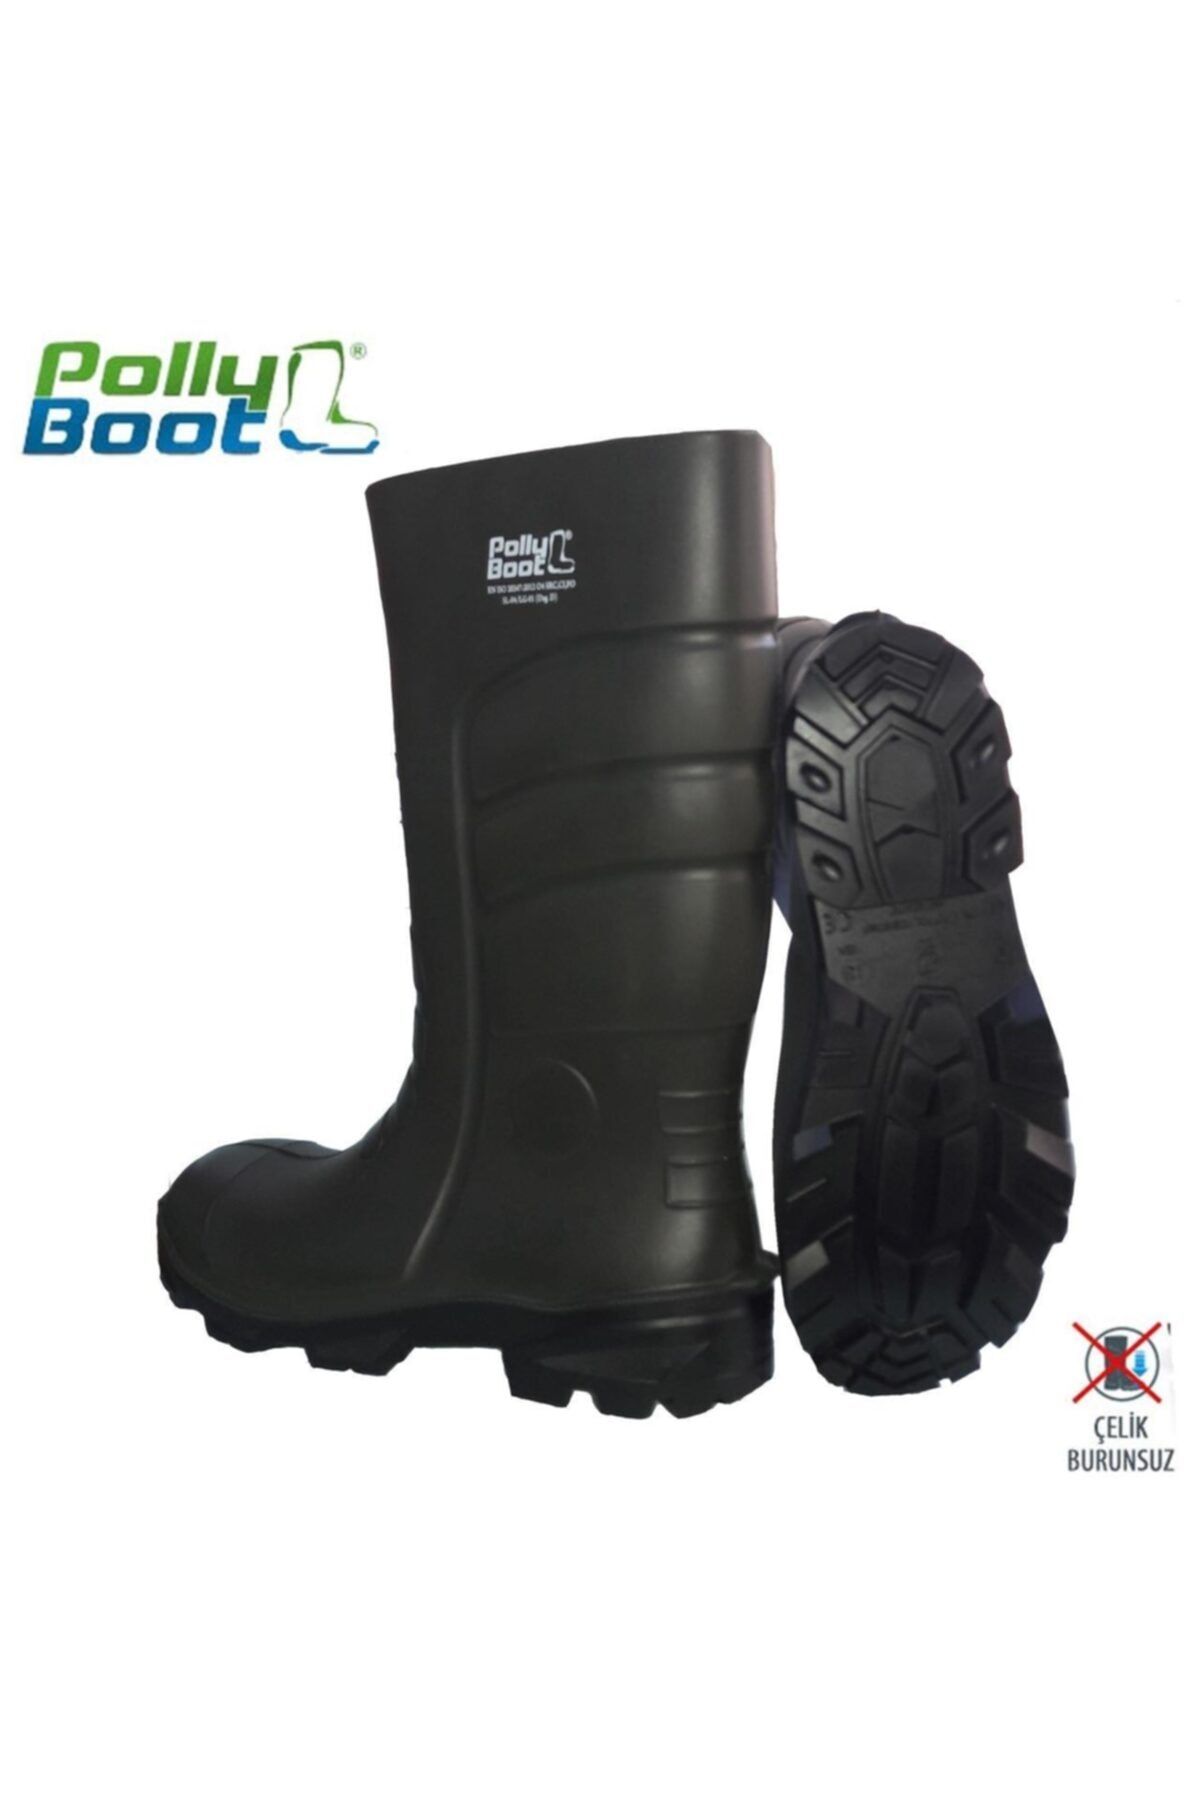 Polly Boot Beta 41 Numara Poliüratan Çizme